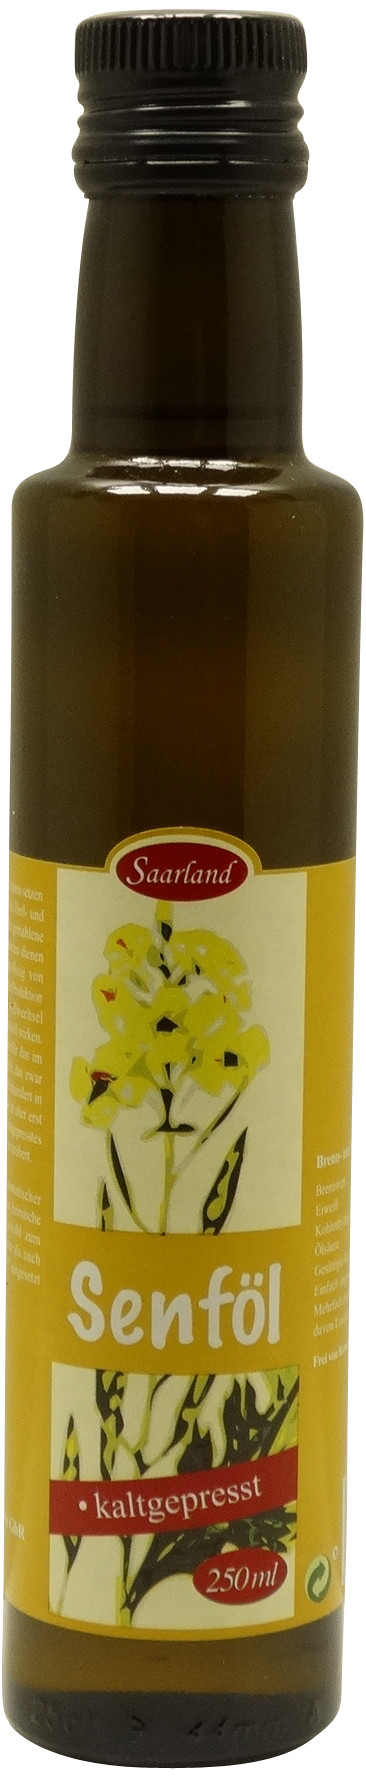 Saarländisches Senföl | Senföle | Samen- und Kernöle | oelix.de - Öle ...